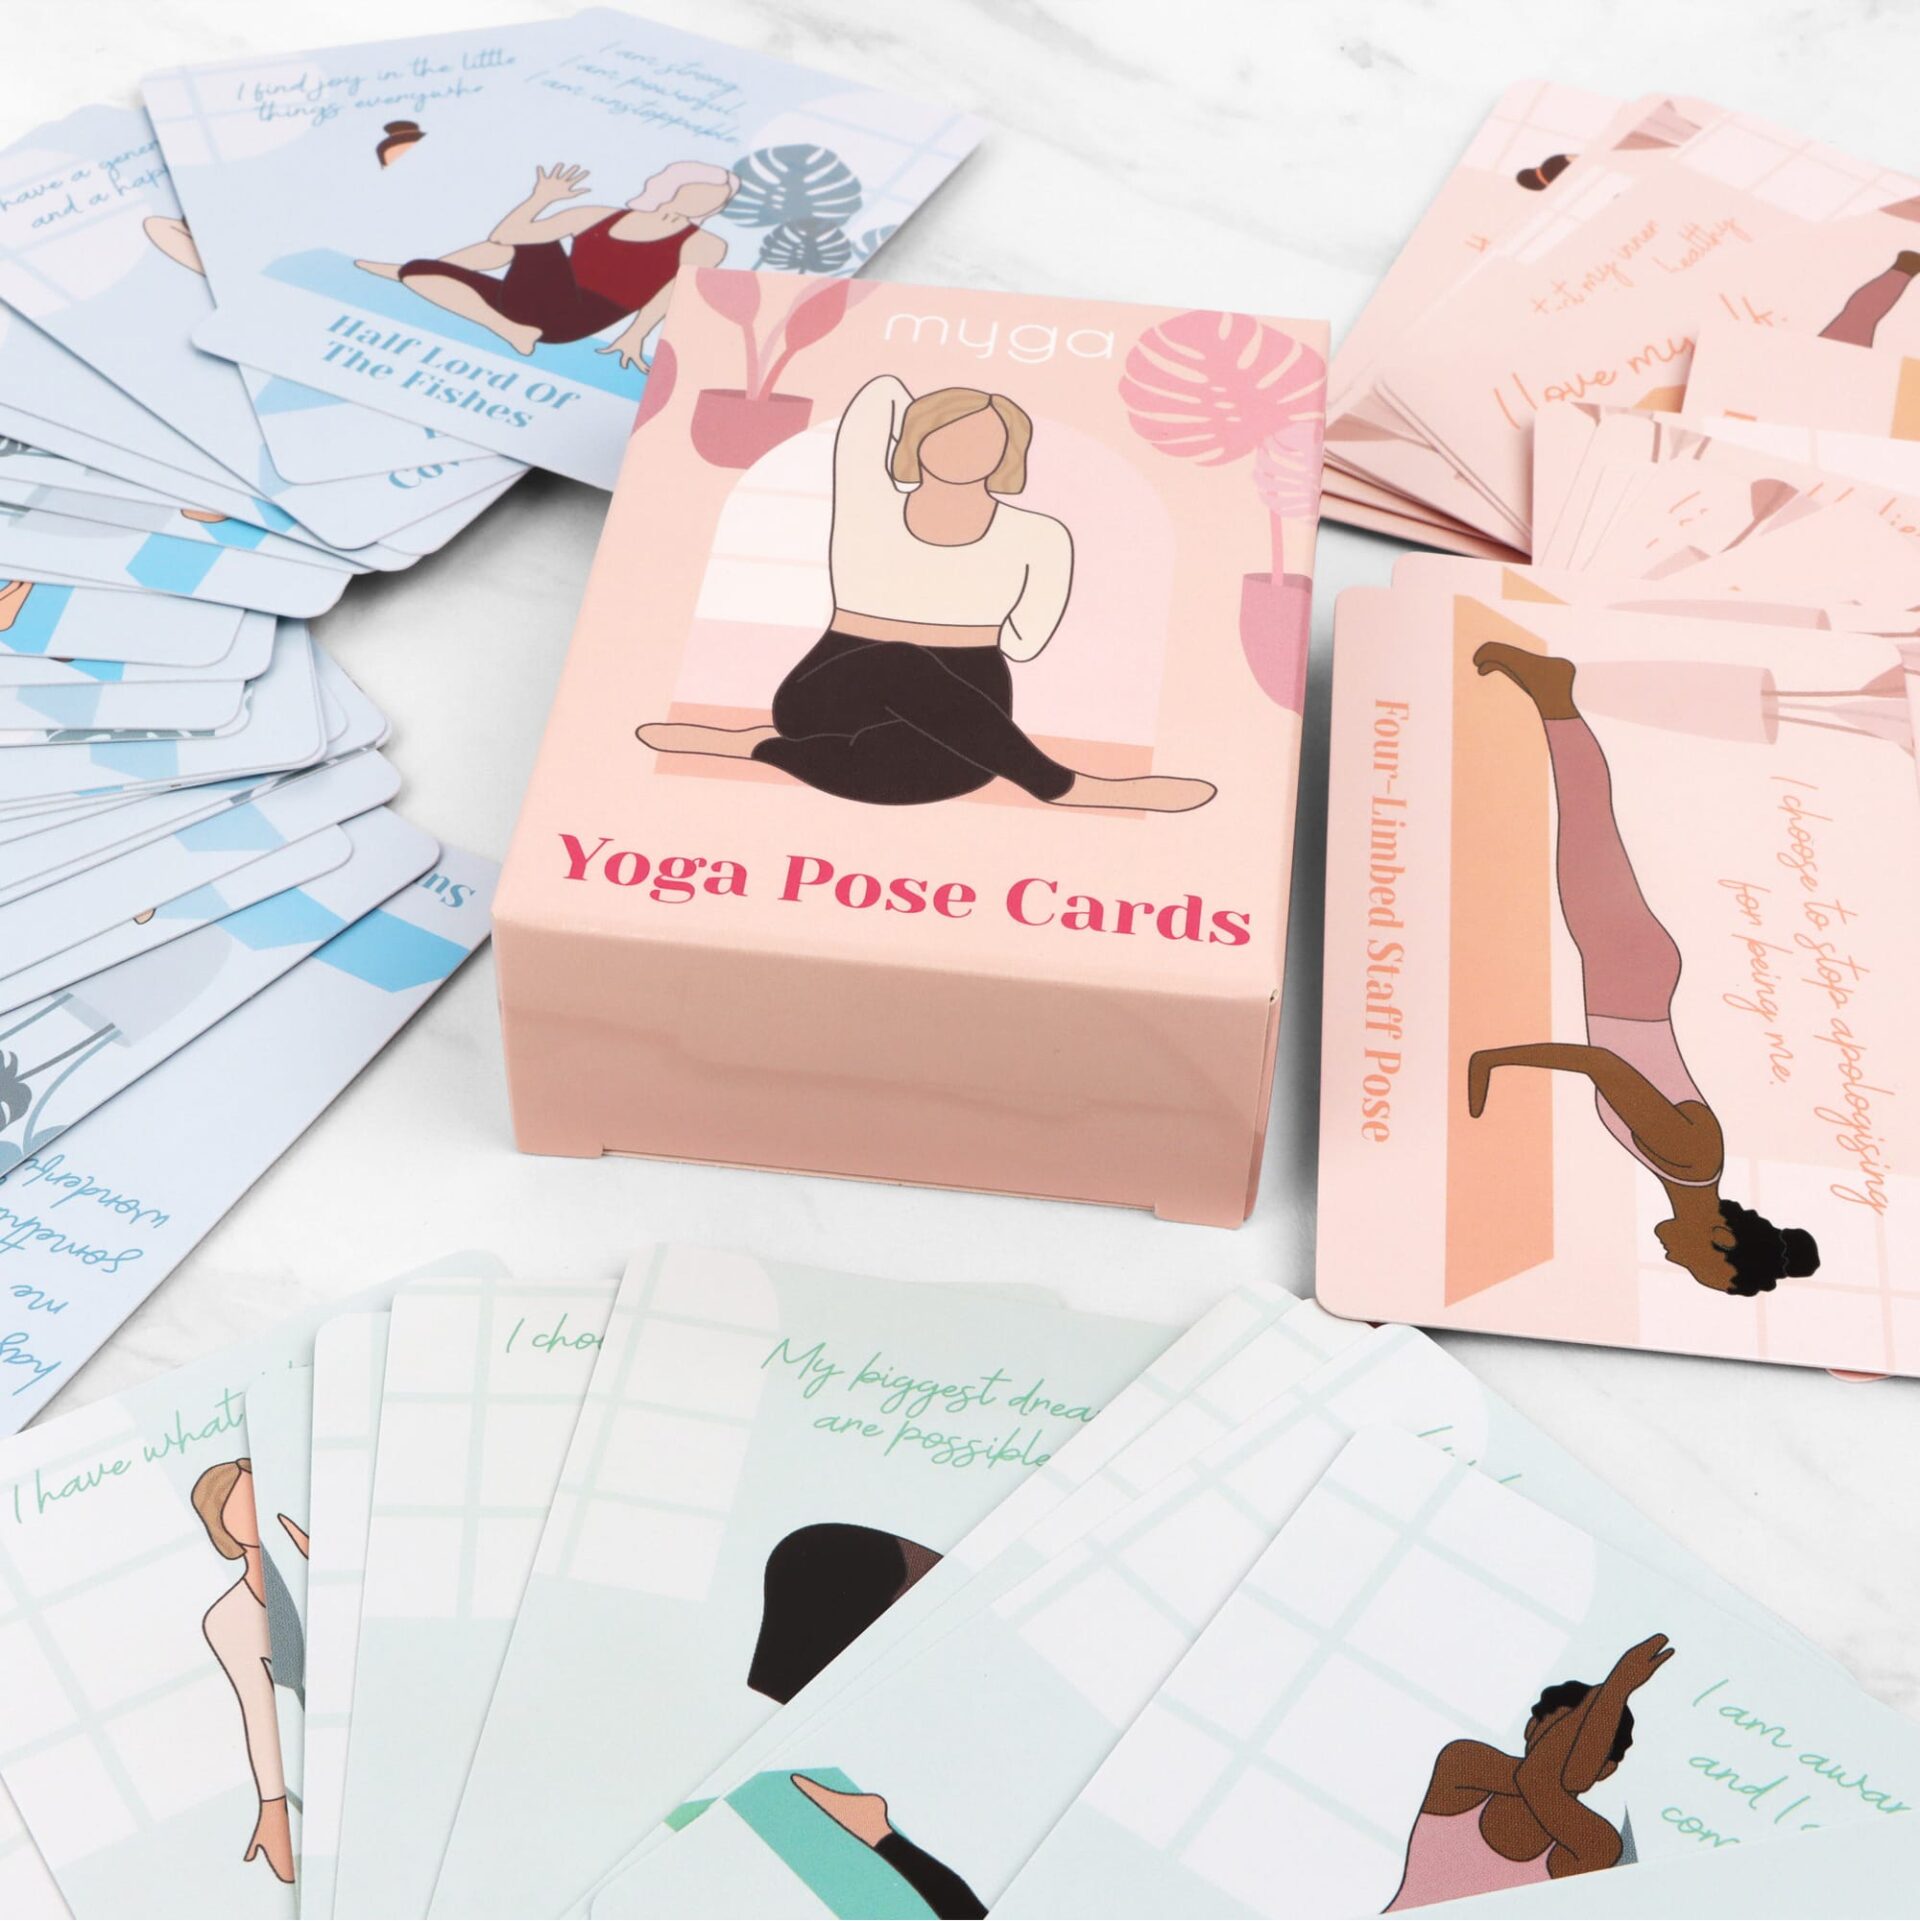 Yoga pose cards